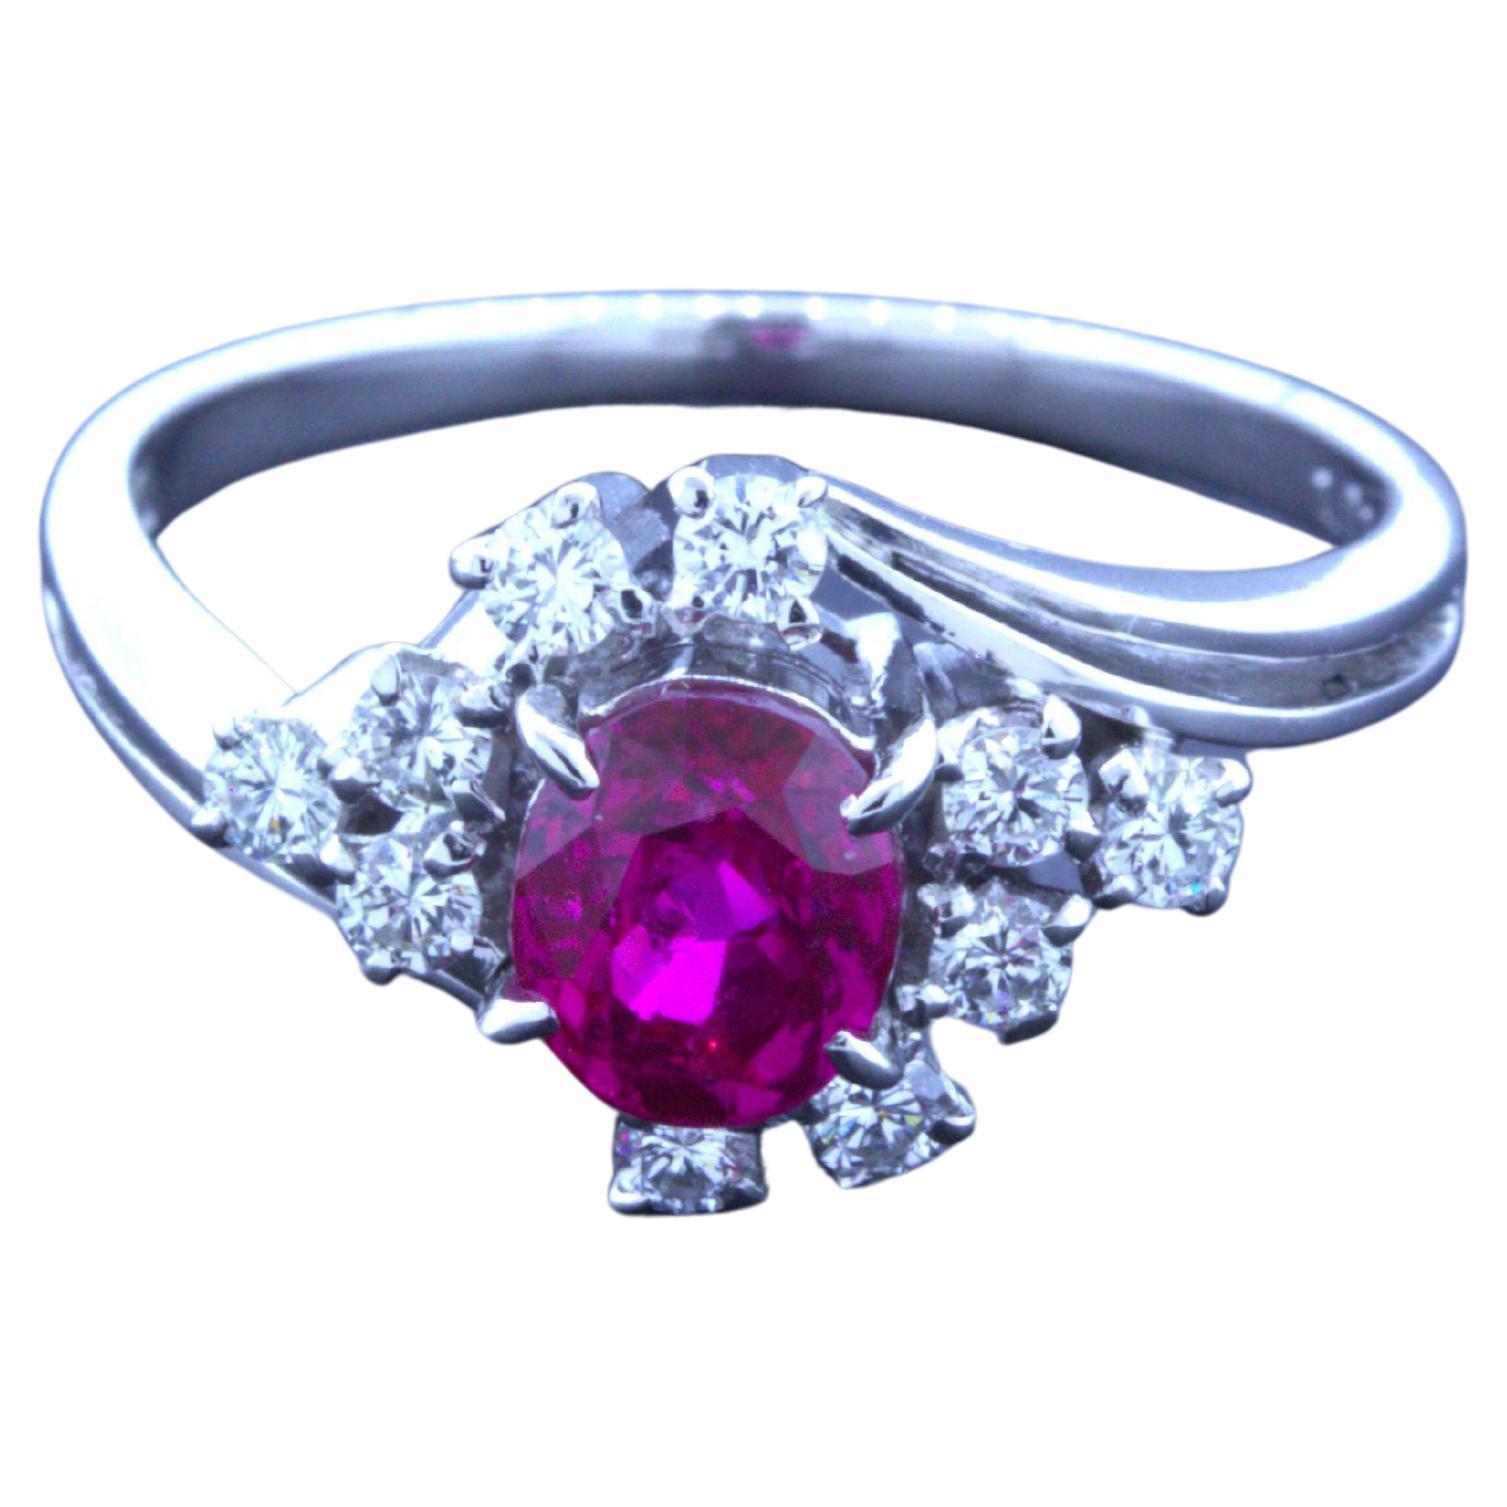 Superb 1.01 Carat Ho-Heat Burmese Ruby Diamond Platinum Ring, GIA Certified For Sale